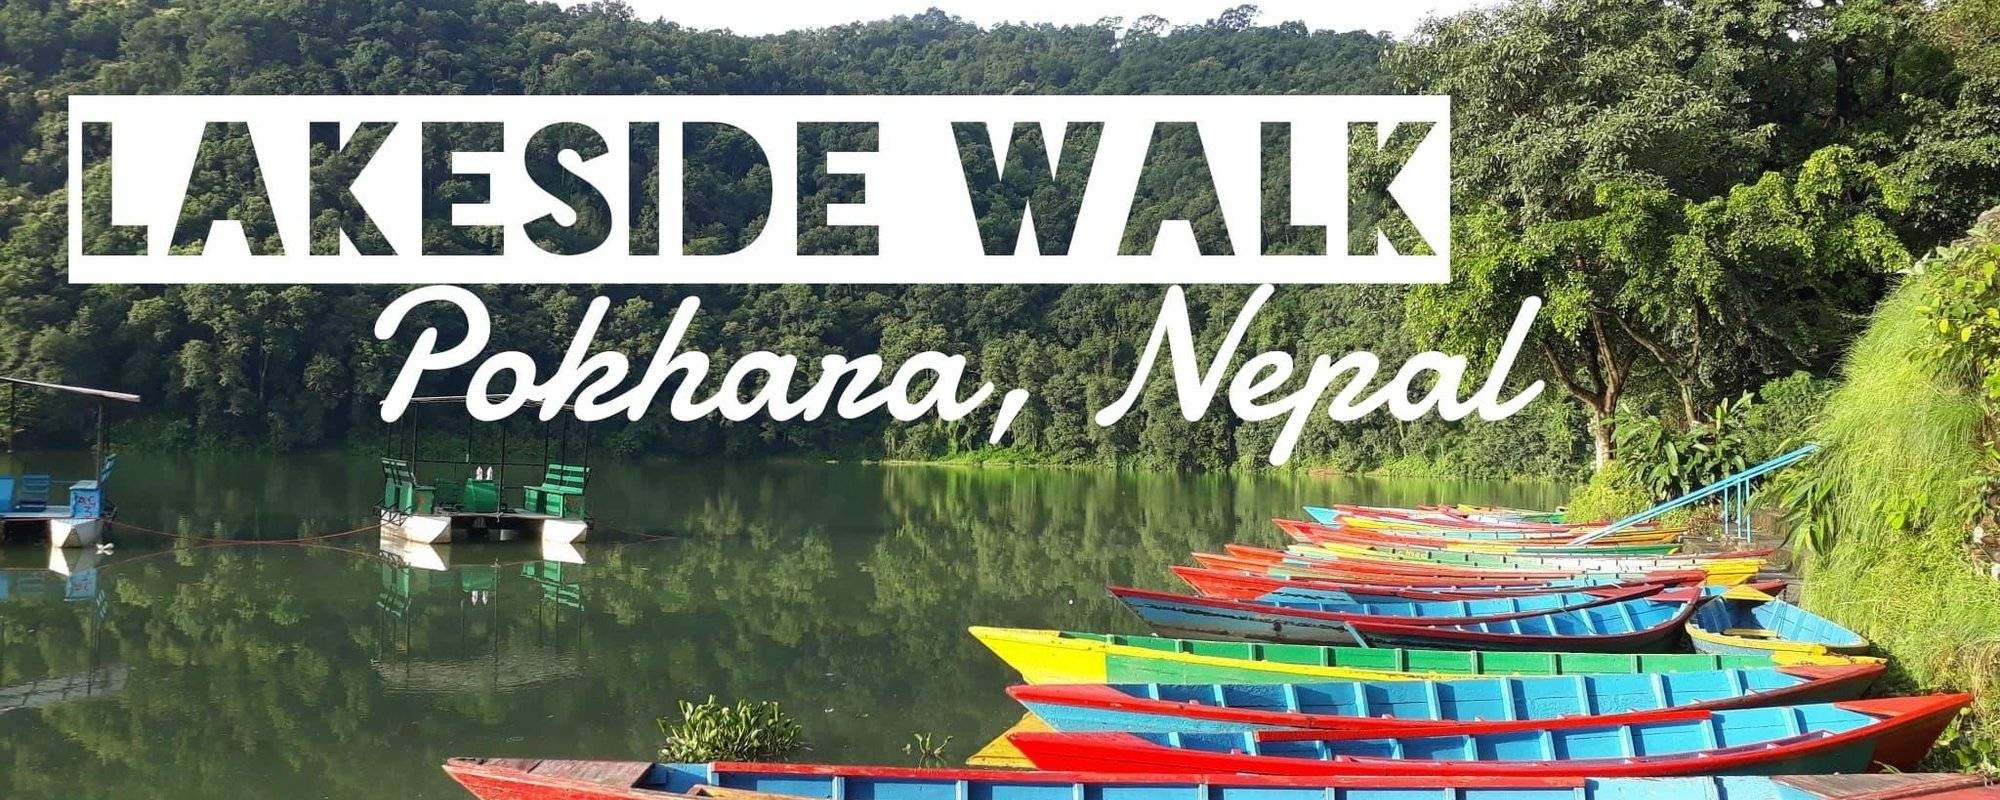 A Lakeside Walk in Pokhara, Nepal - A Wednesday Walk